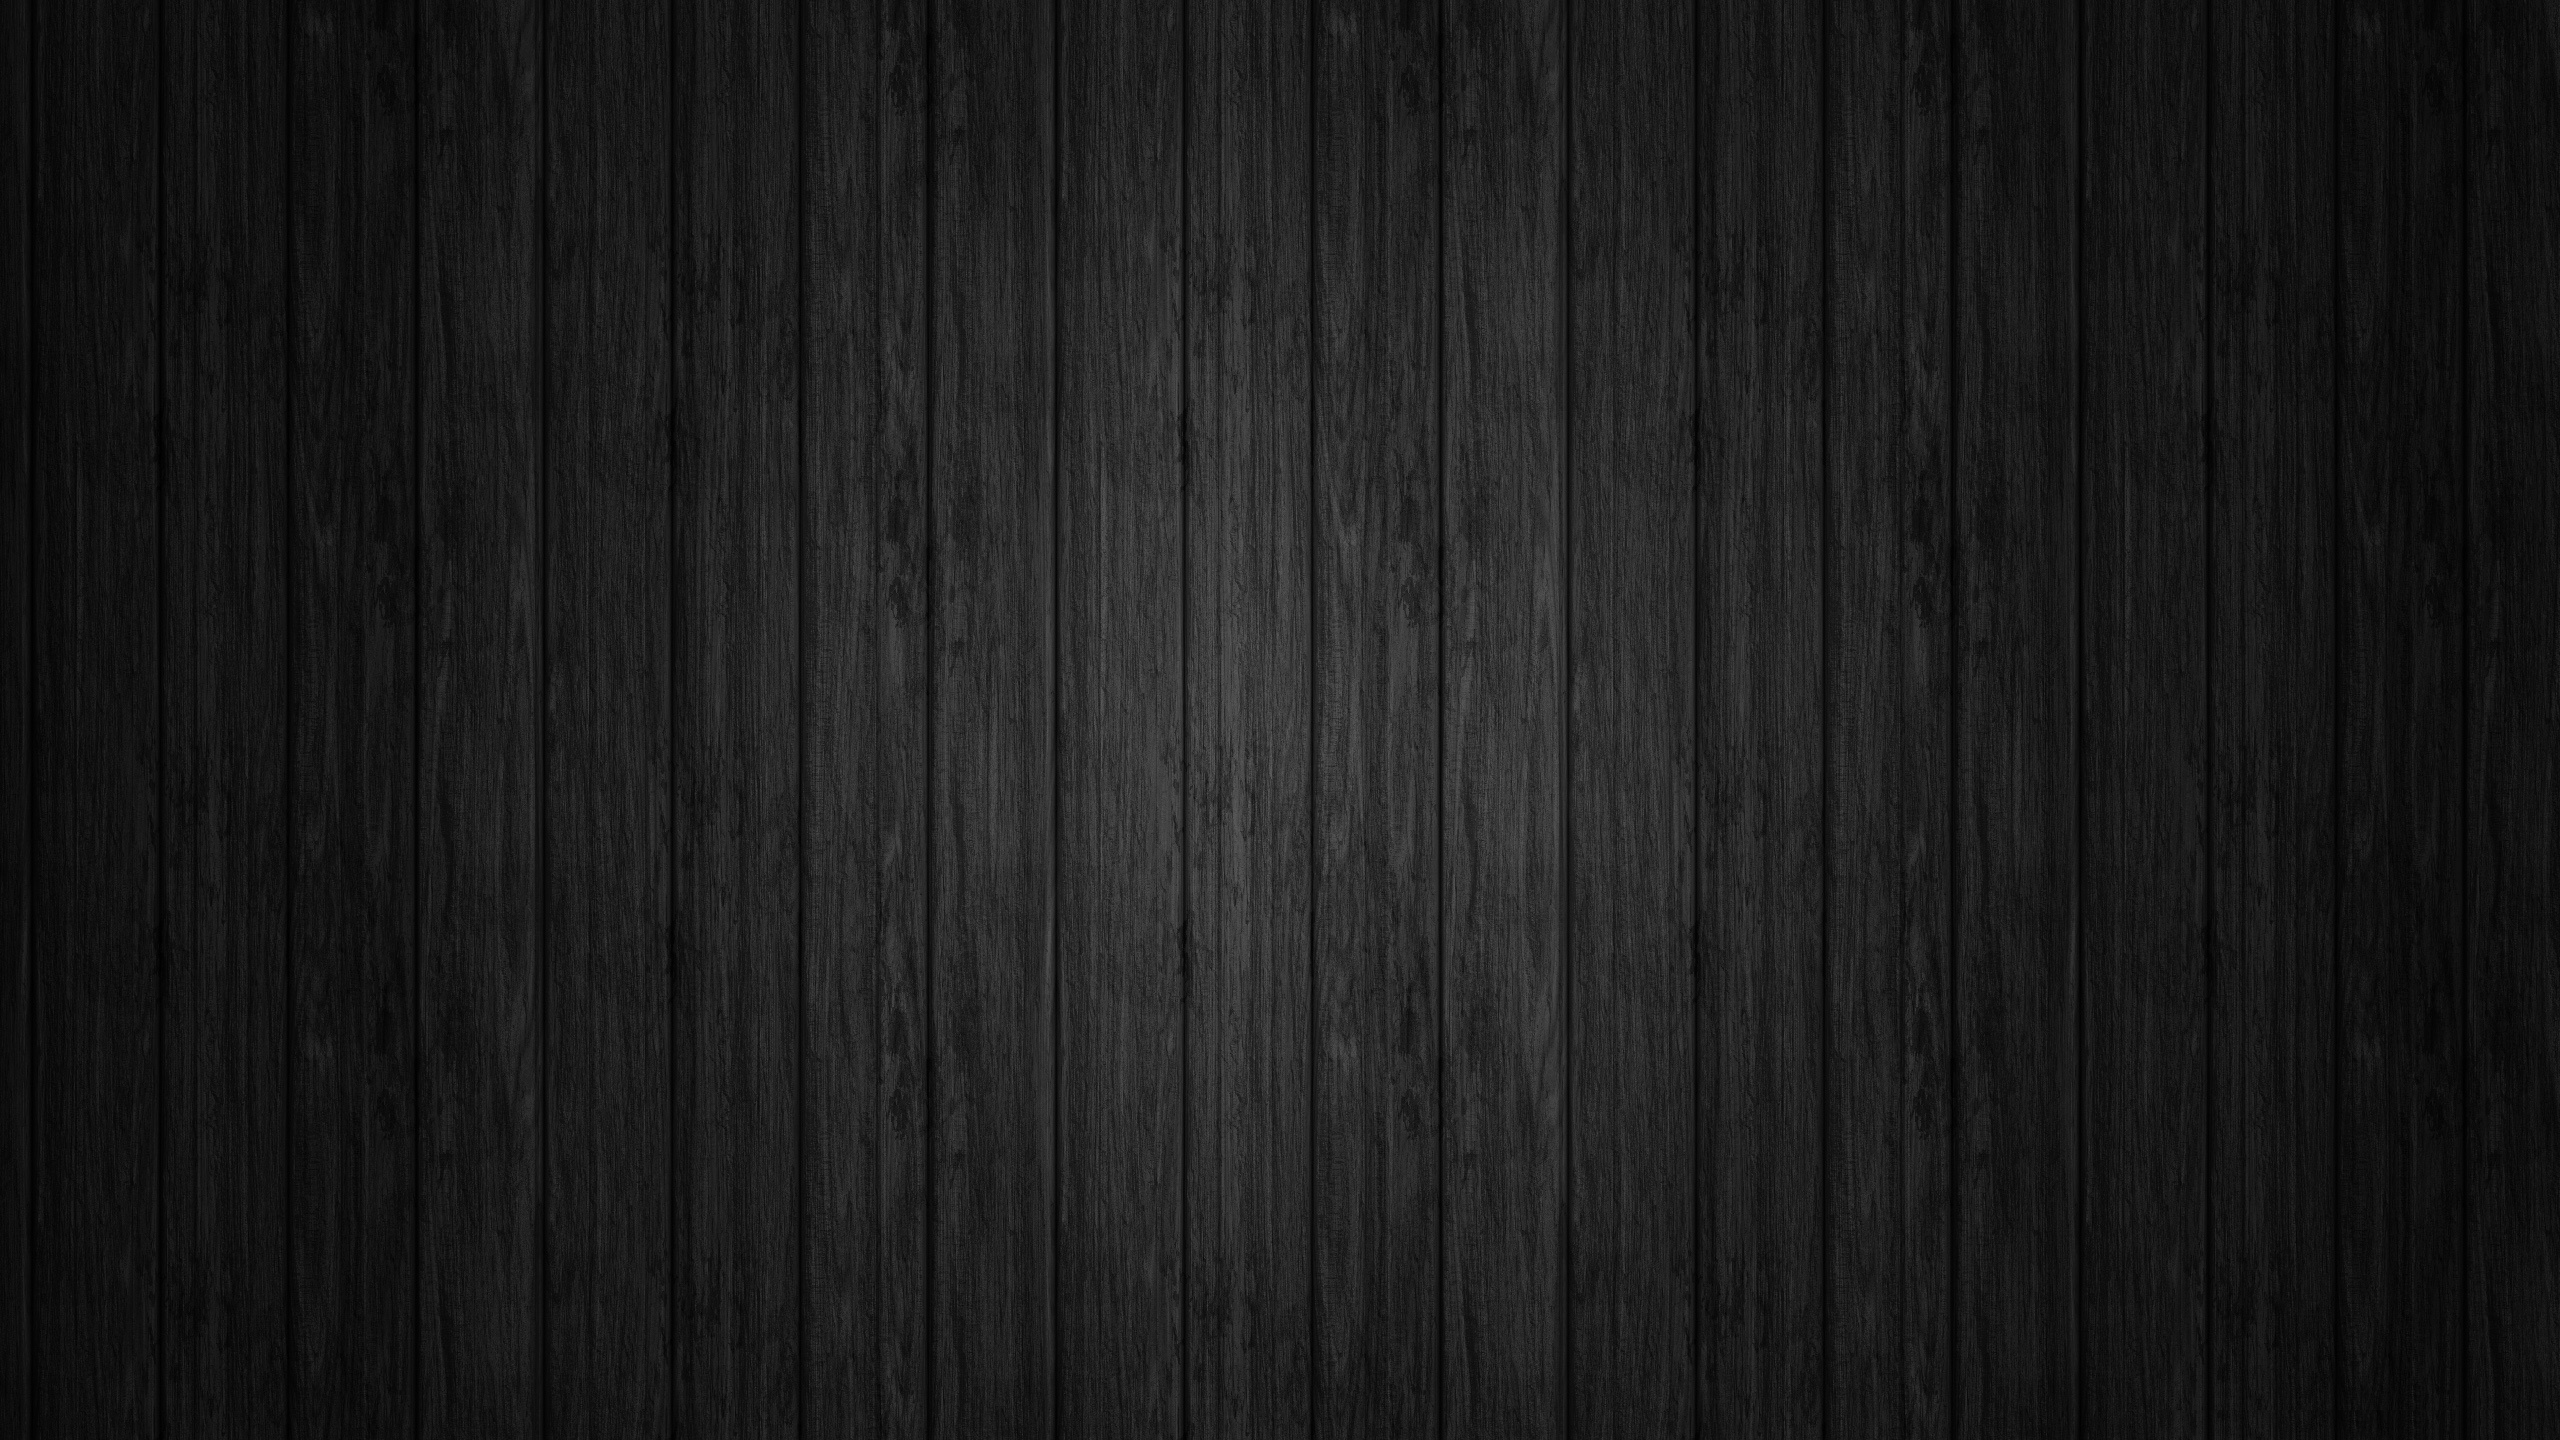 Sparkly Wallpaper Wood Black C03mqaskj Zqdyc6b Background